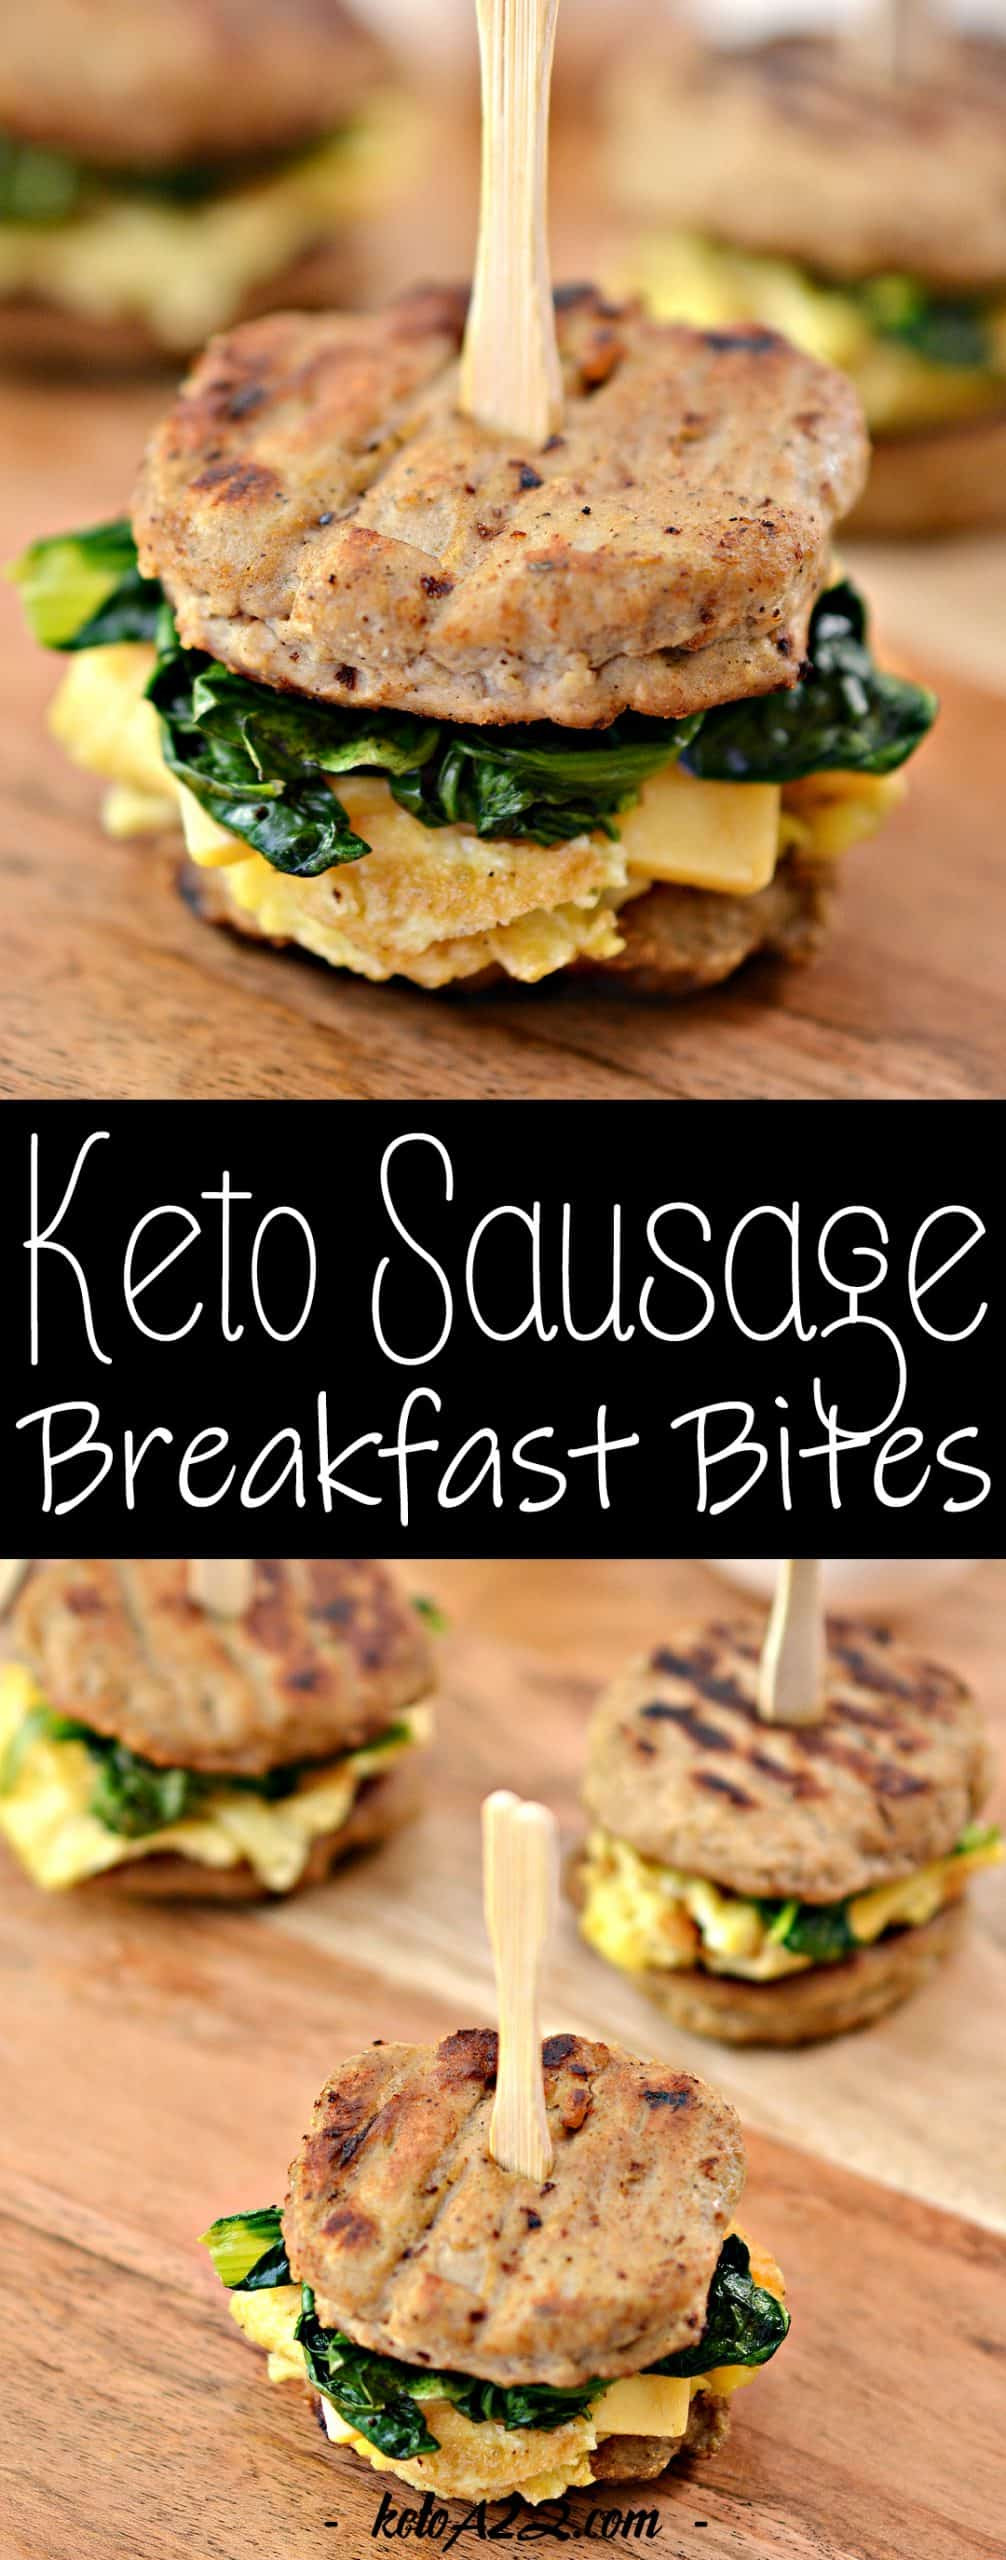 Keto Breakfast Sausage
 Keto Sausage Breakfast Bites Easy Keto Breakfast Recipe